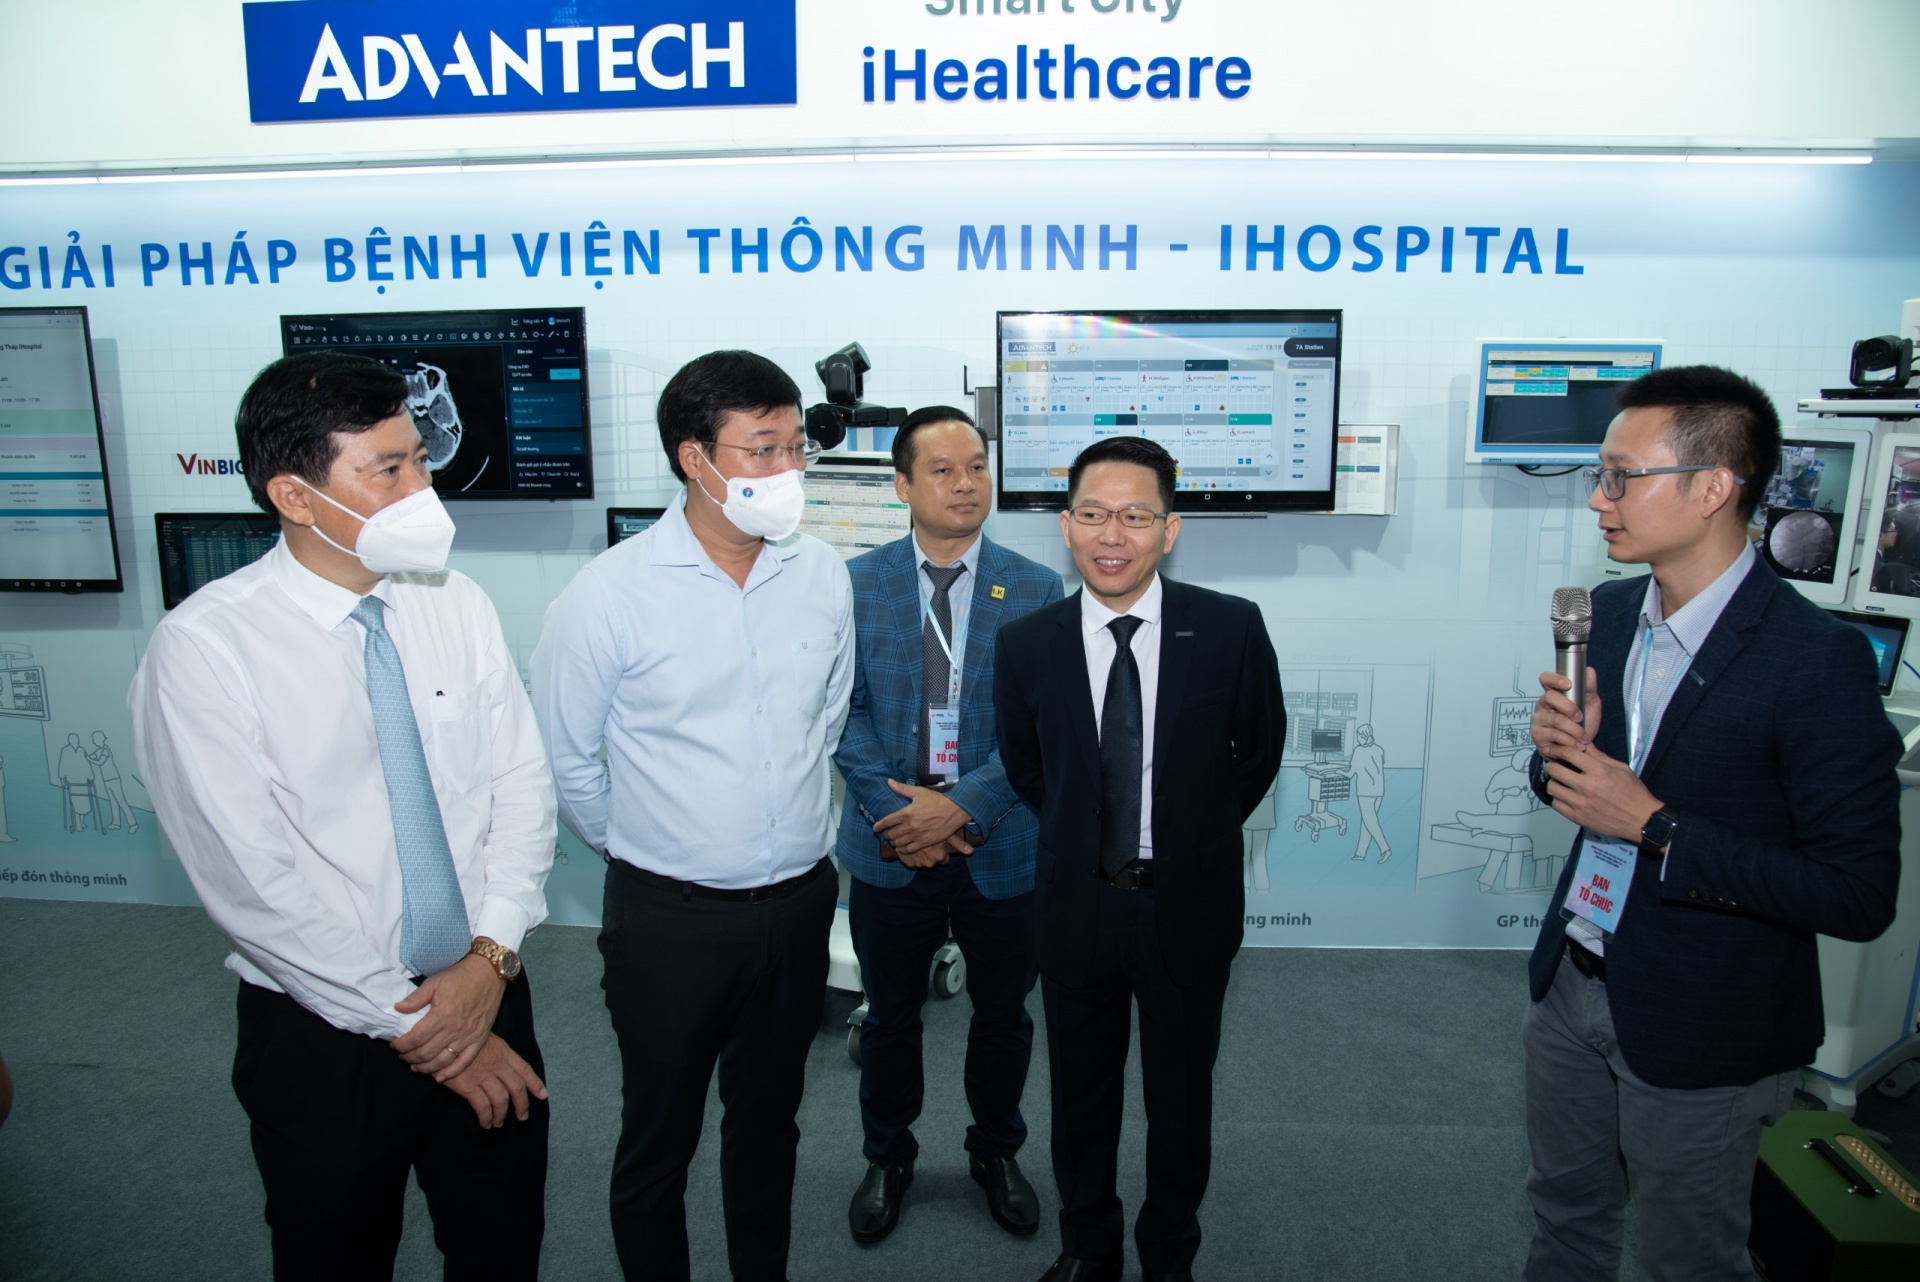 Advantech accompanies Dong Thap on its digital transformation journey